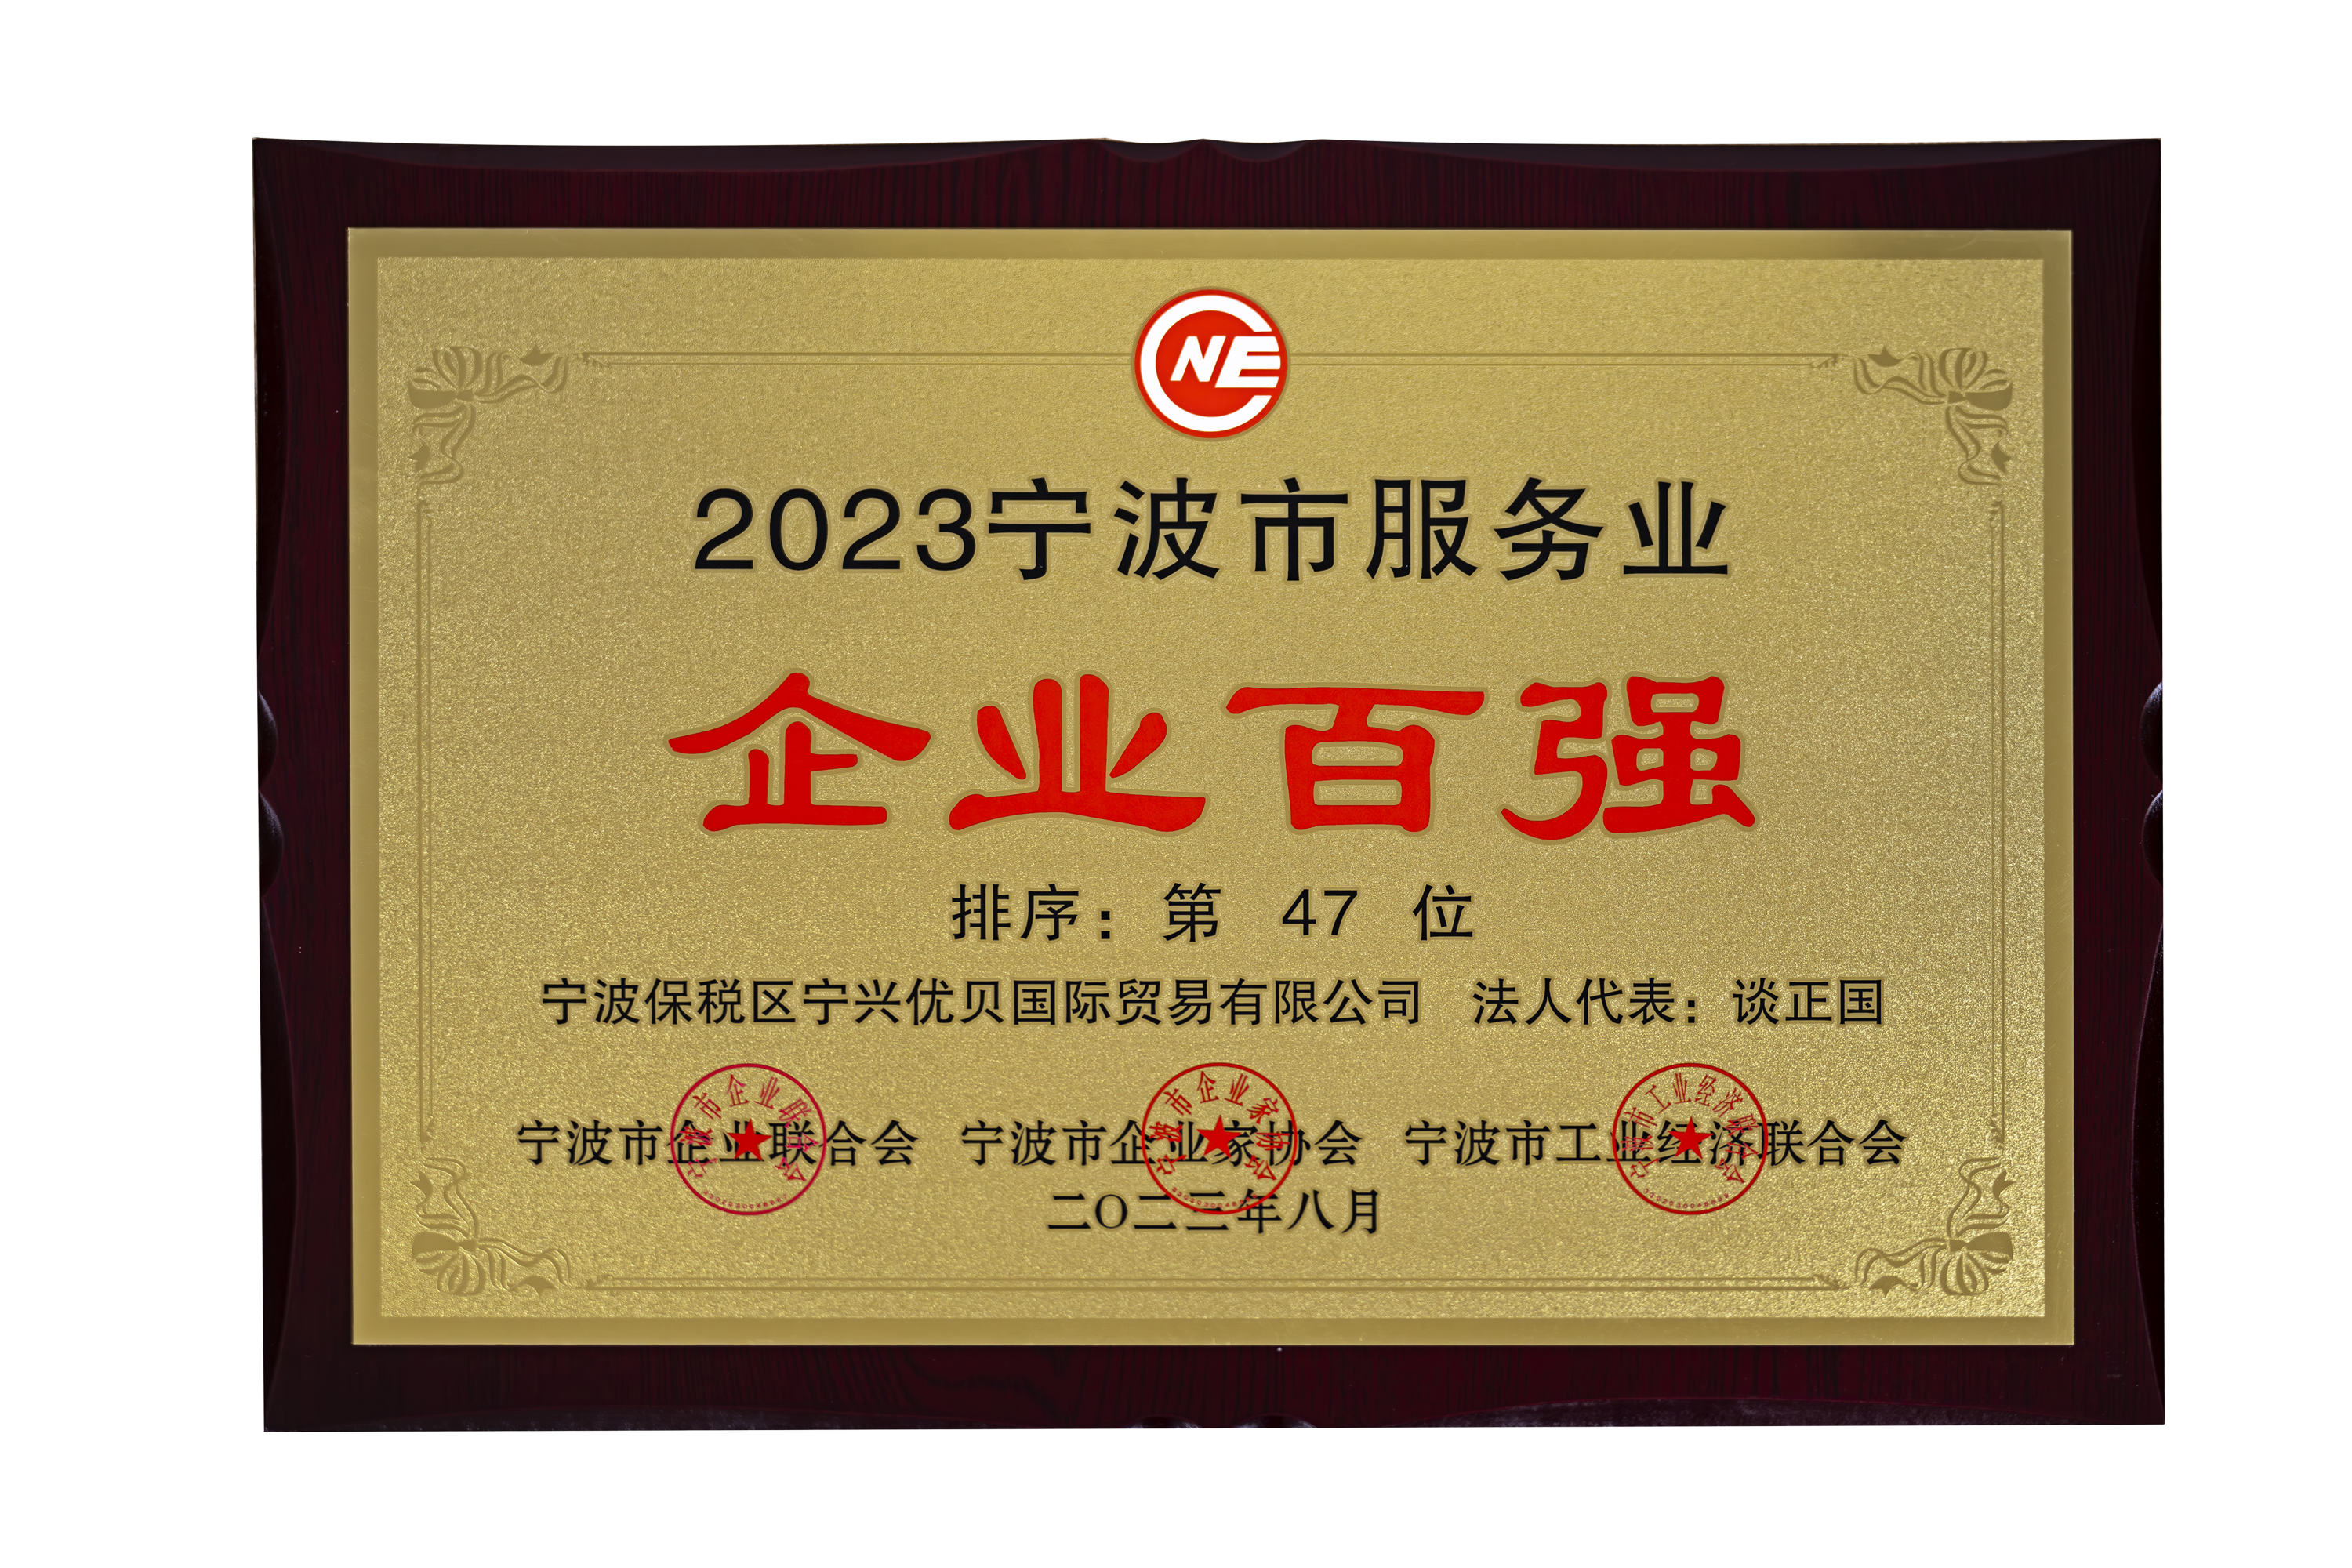 Good News | Ningshing Ubay Honored as One of the Top 100 Service Enterprises in Ningbo in 2023